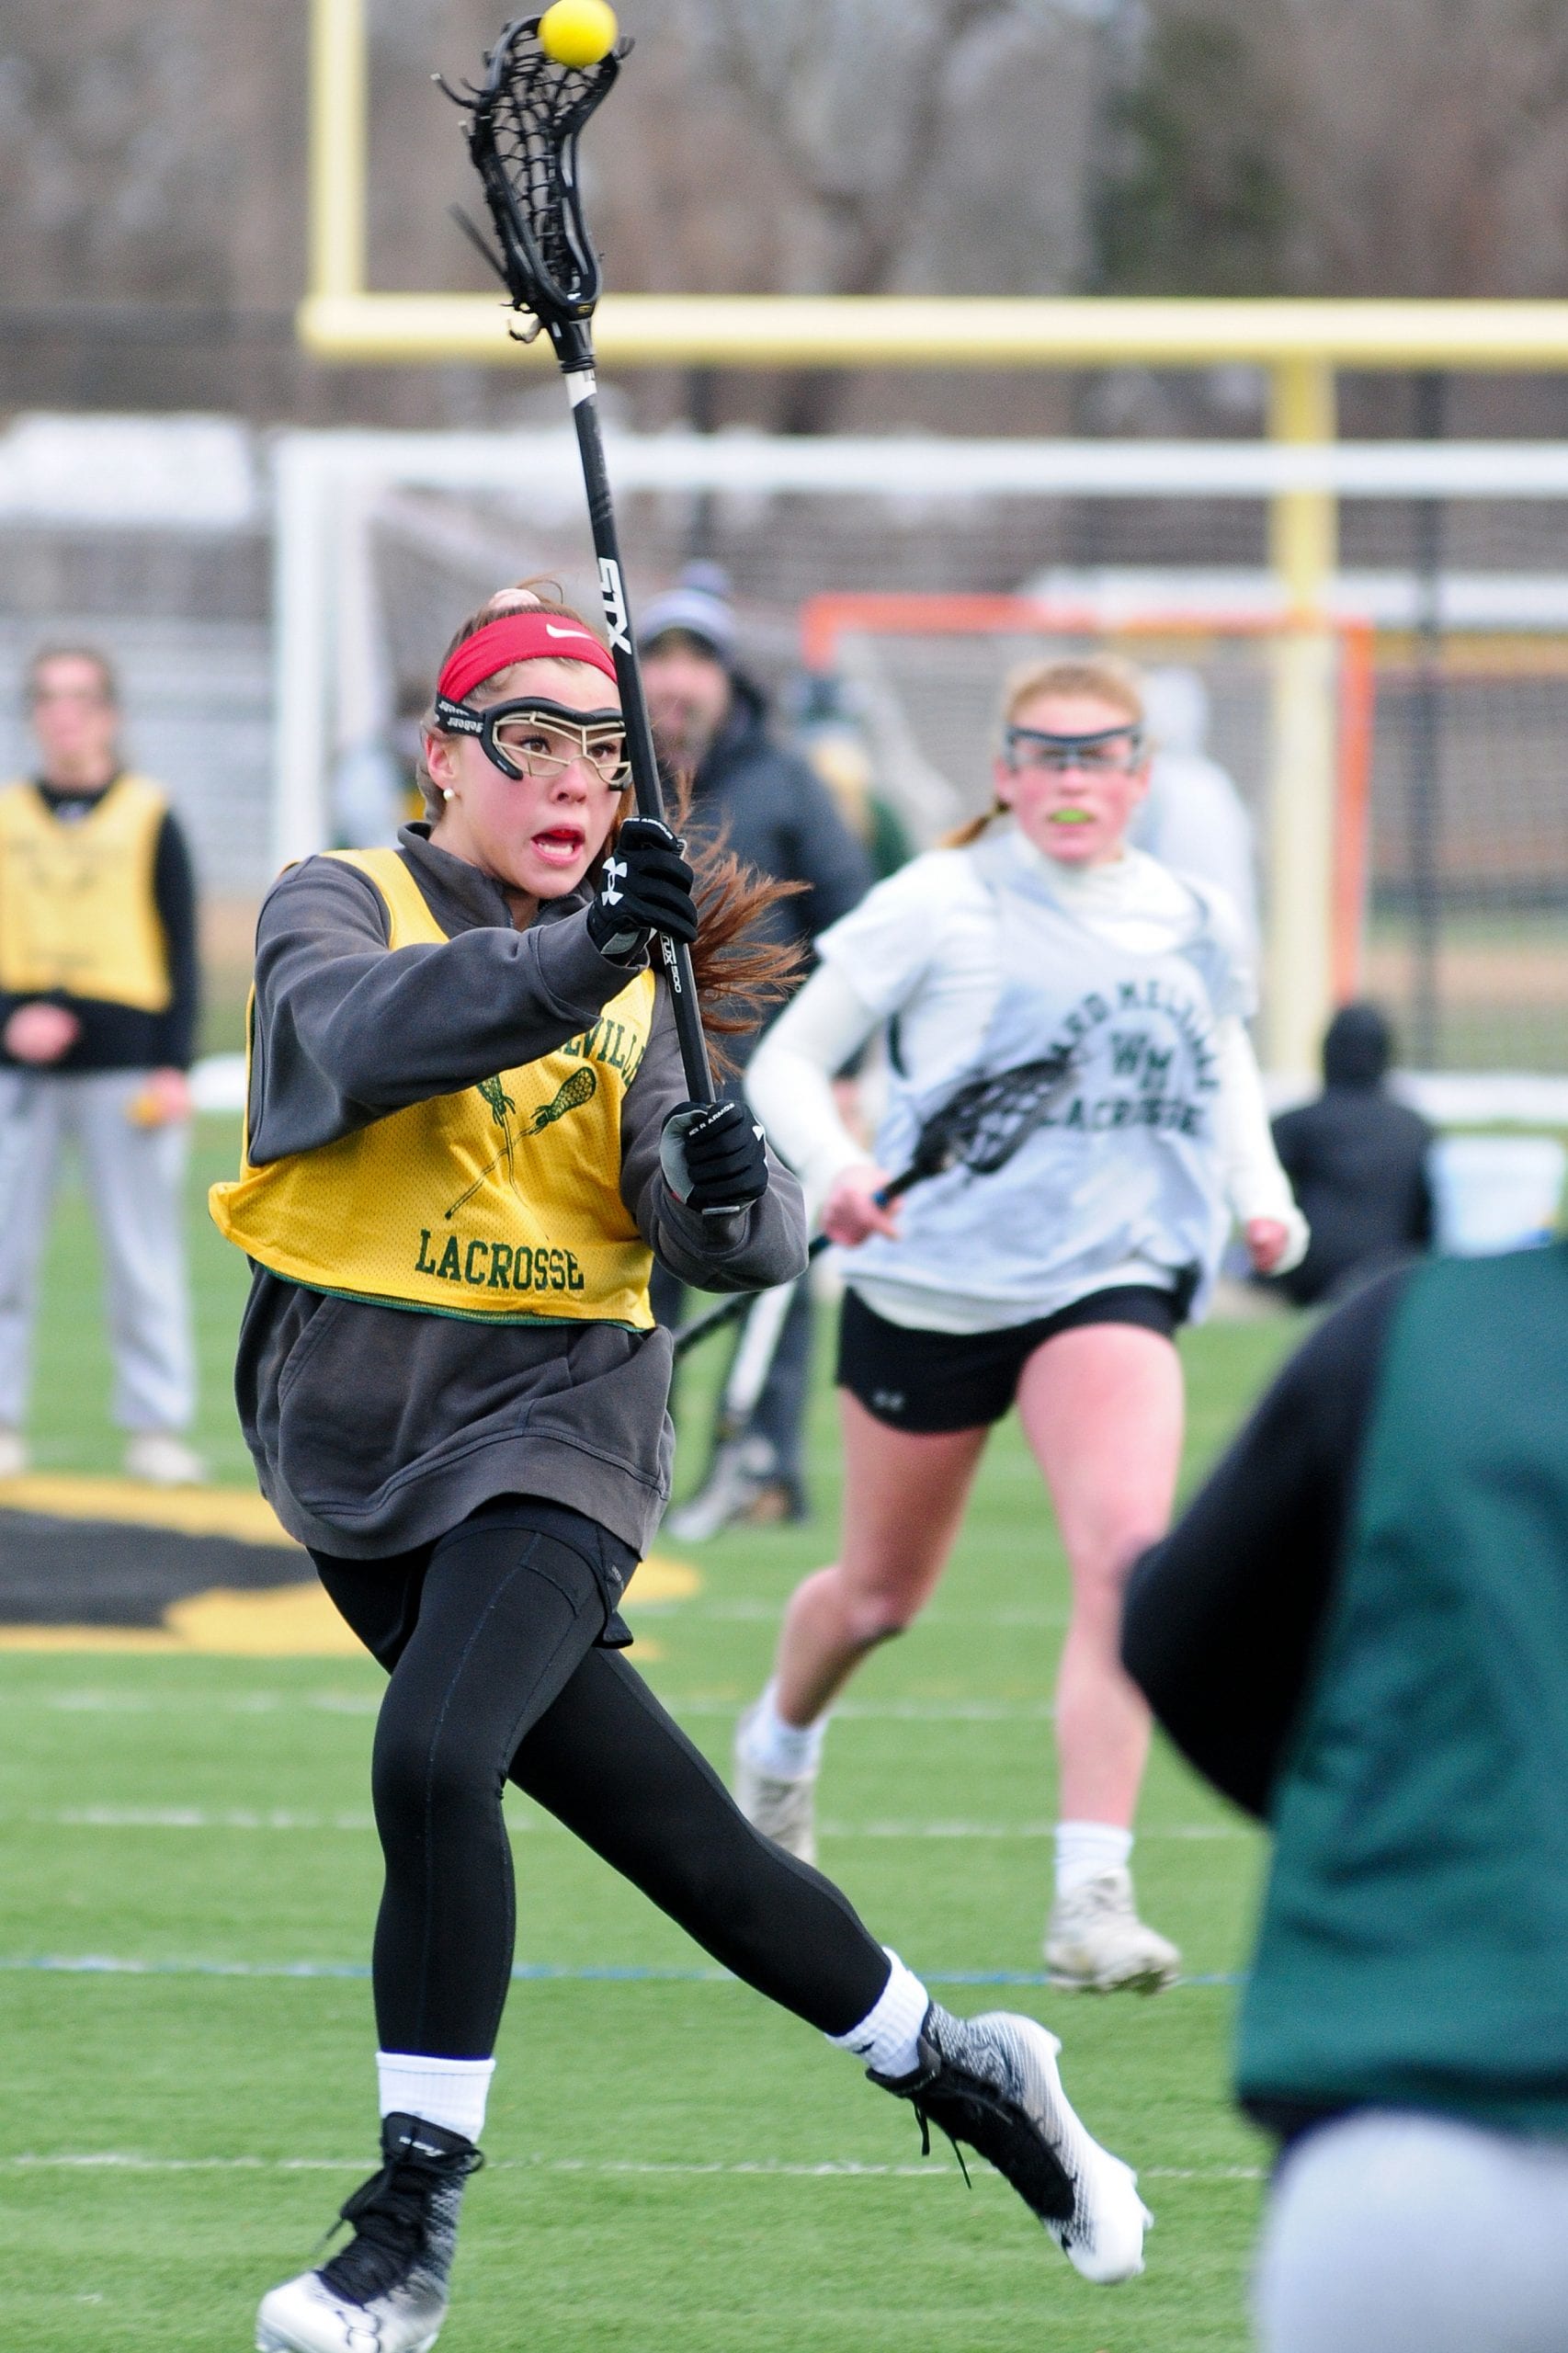 Last season’s late loss adds fuel to Ward Melville girls lacrosse team’s fire TBR News Media